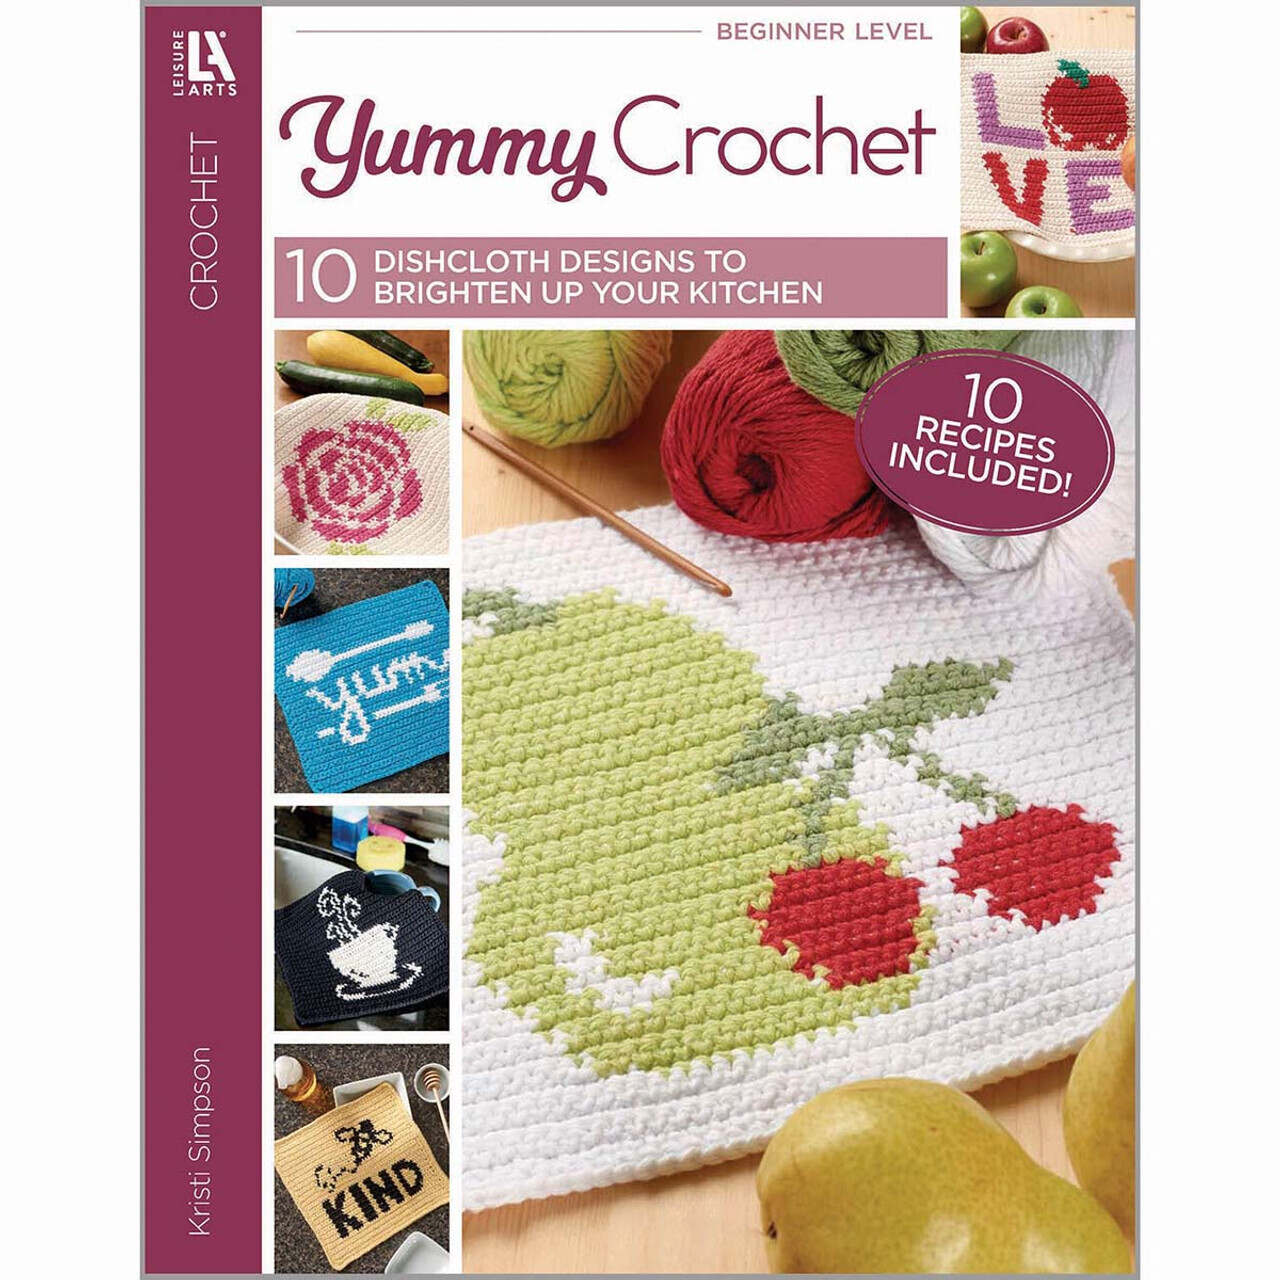 Yummy Crochet Book